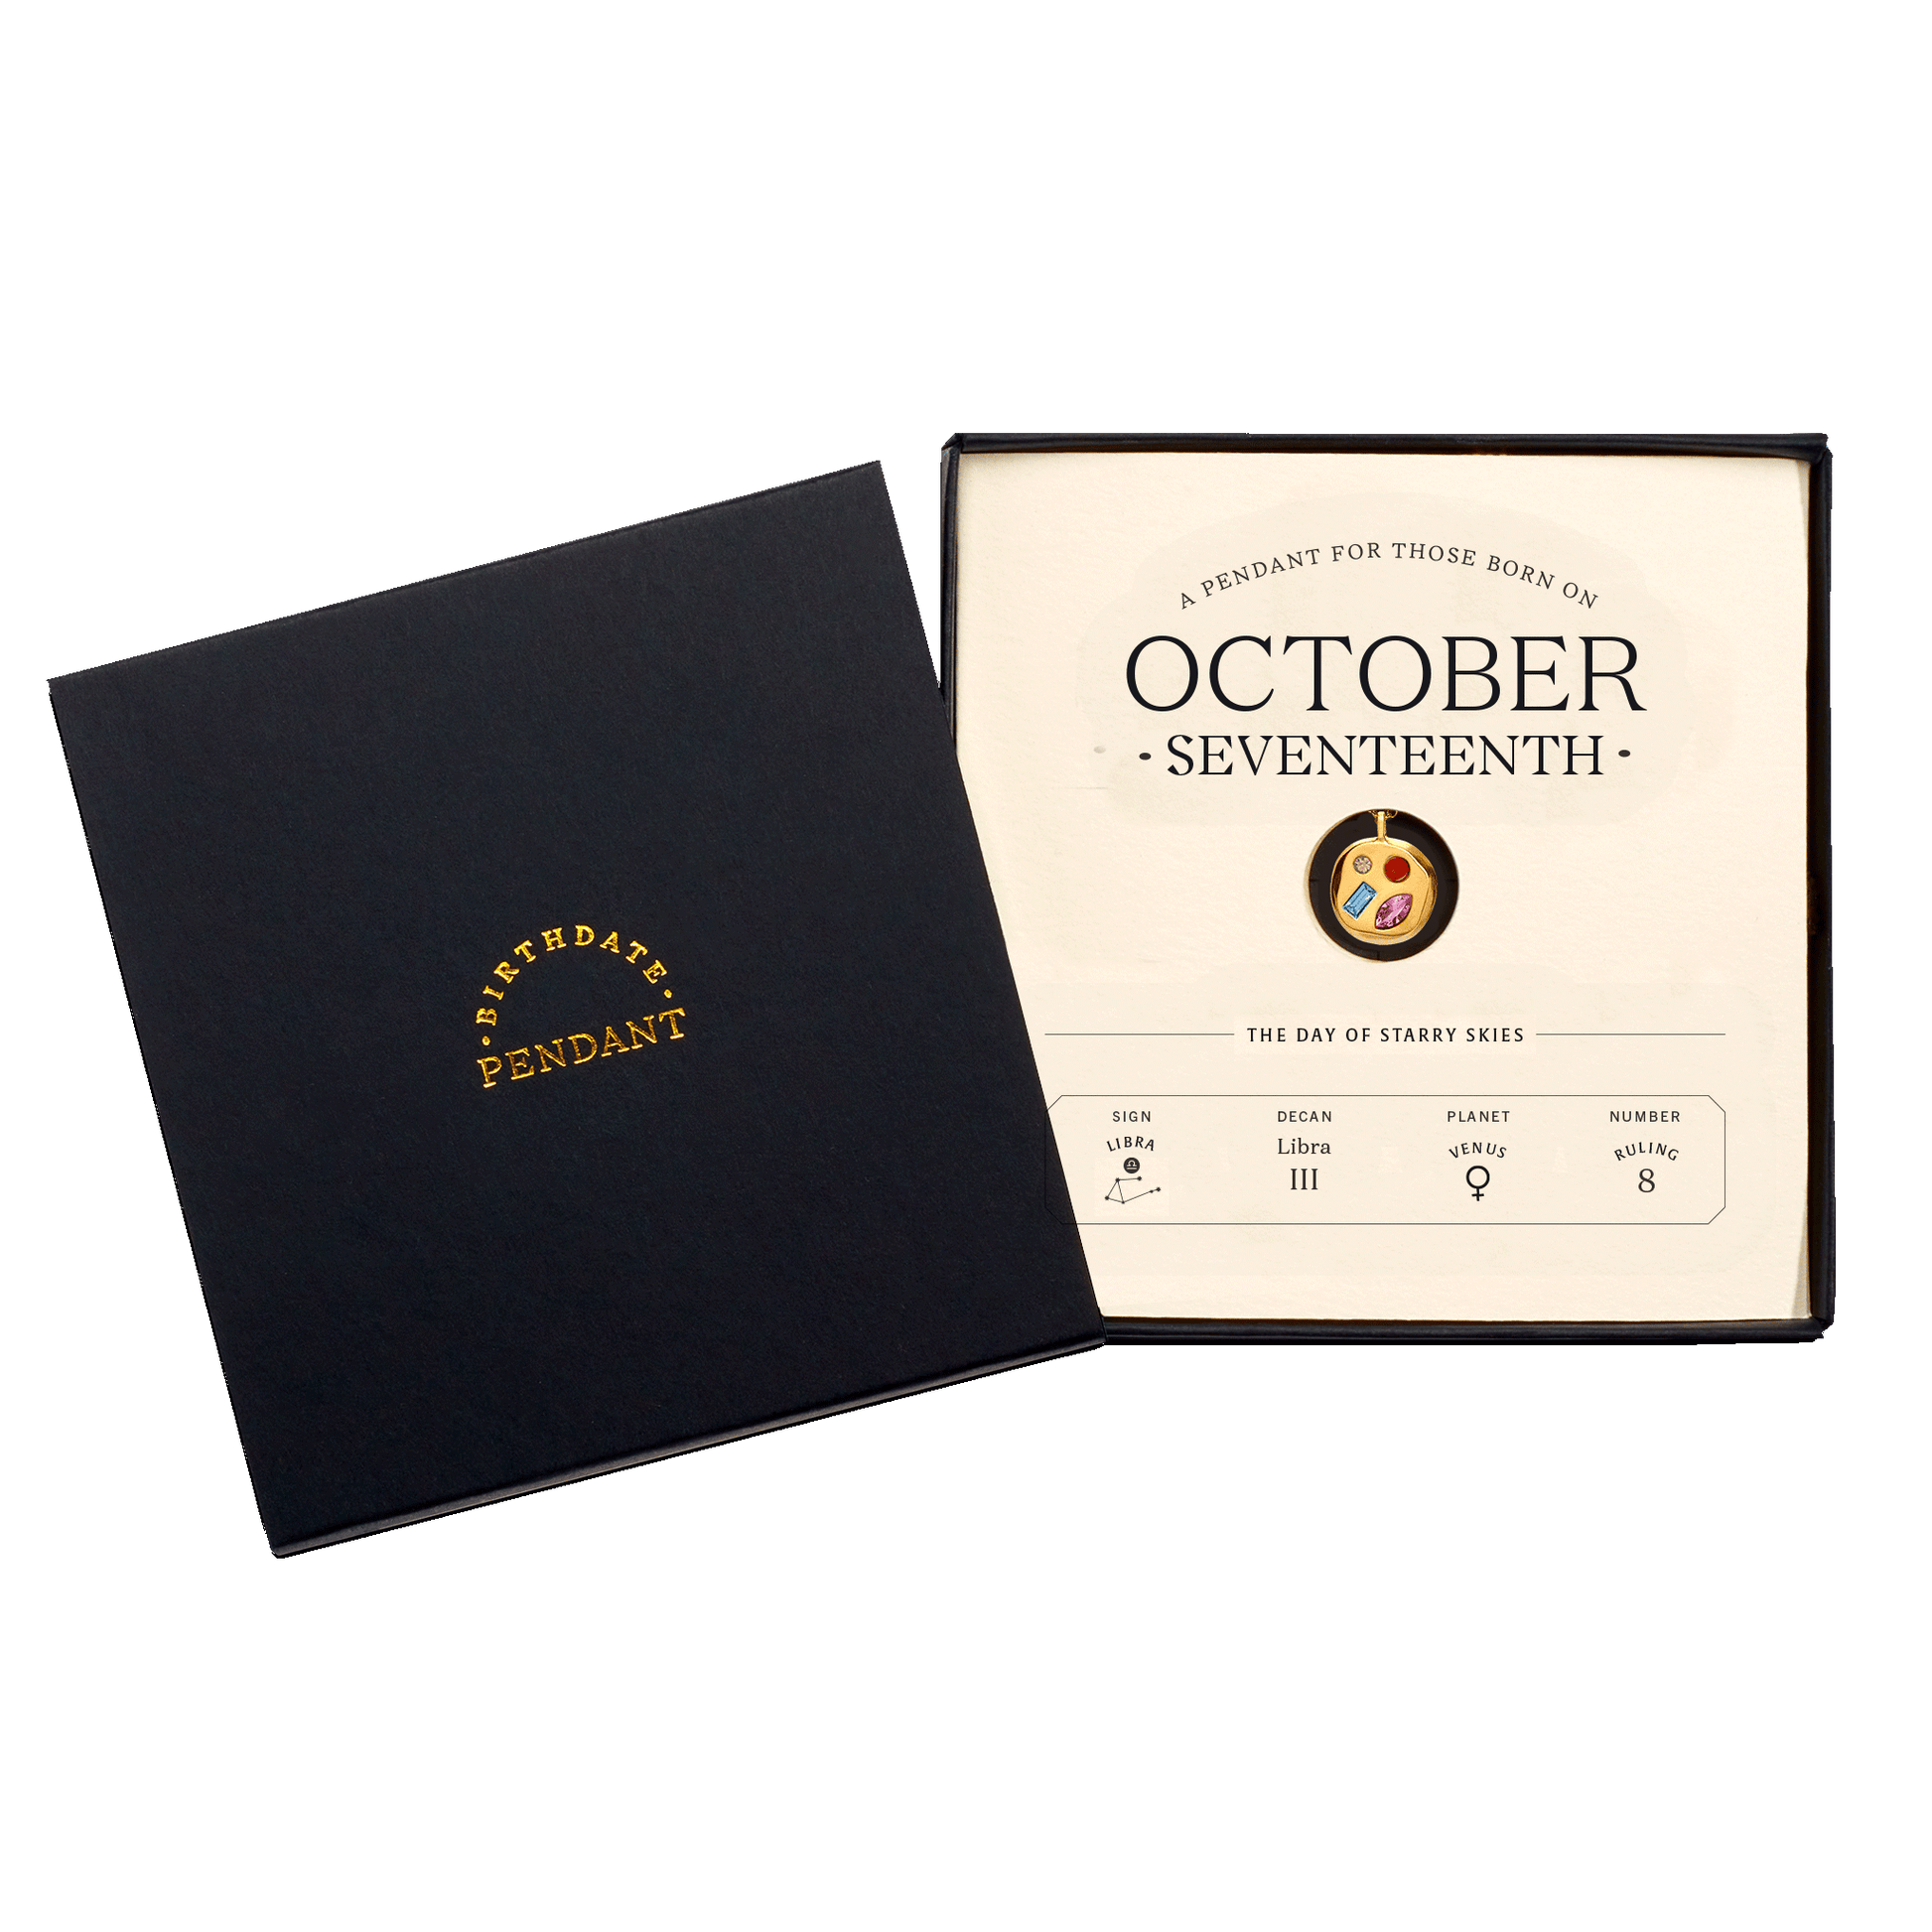 The October Seventeenth Pendant inside its box